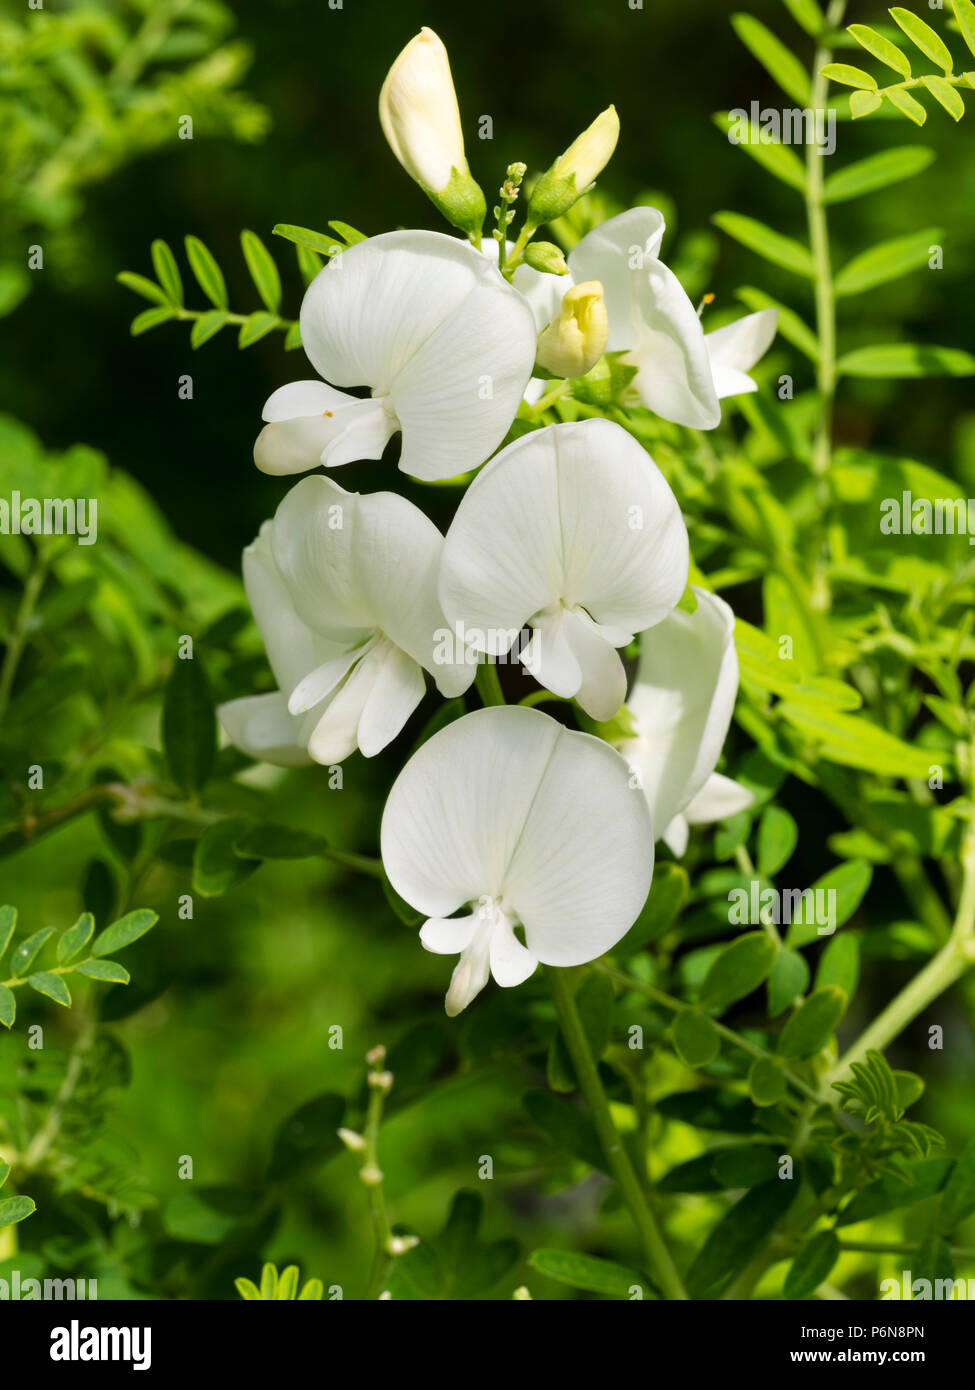 White pea flowers of the tender Australian perennial Darling pea, Swainsona galegifolia 'Alba' Stock Photo